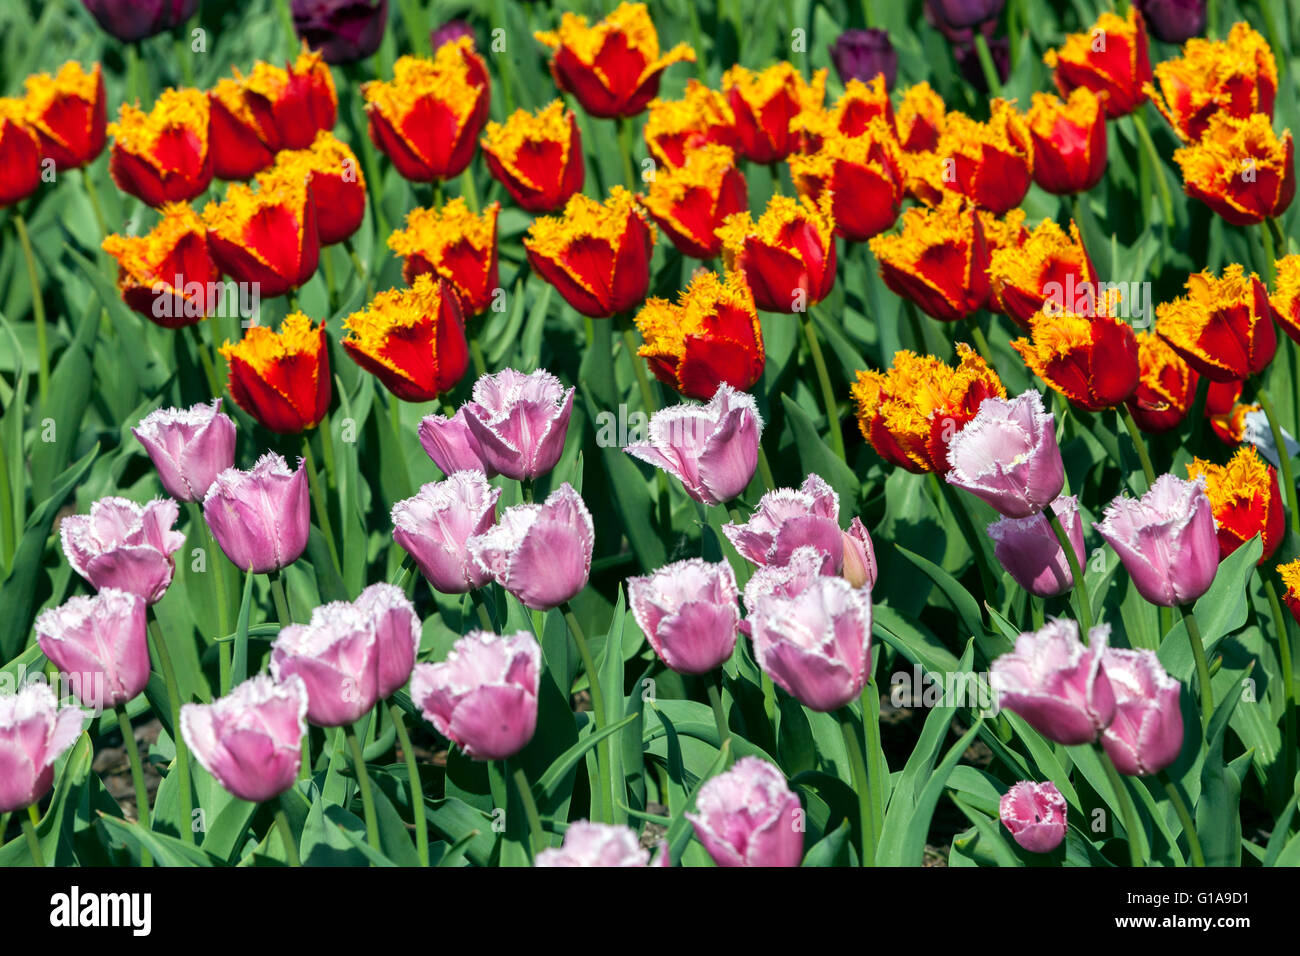 Giardino Tulips fiorito, Tulipa giallo rosso "Palmares" Tulipa rosa "Cummins", tulipani orlati, fiori misti tulipani rosa giallo rosso in colorata aiuola Foto Stock